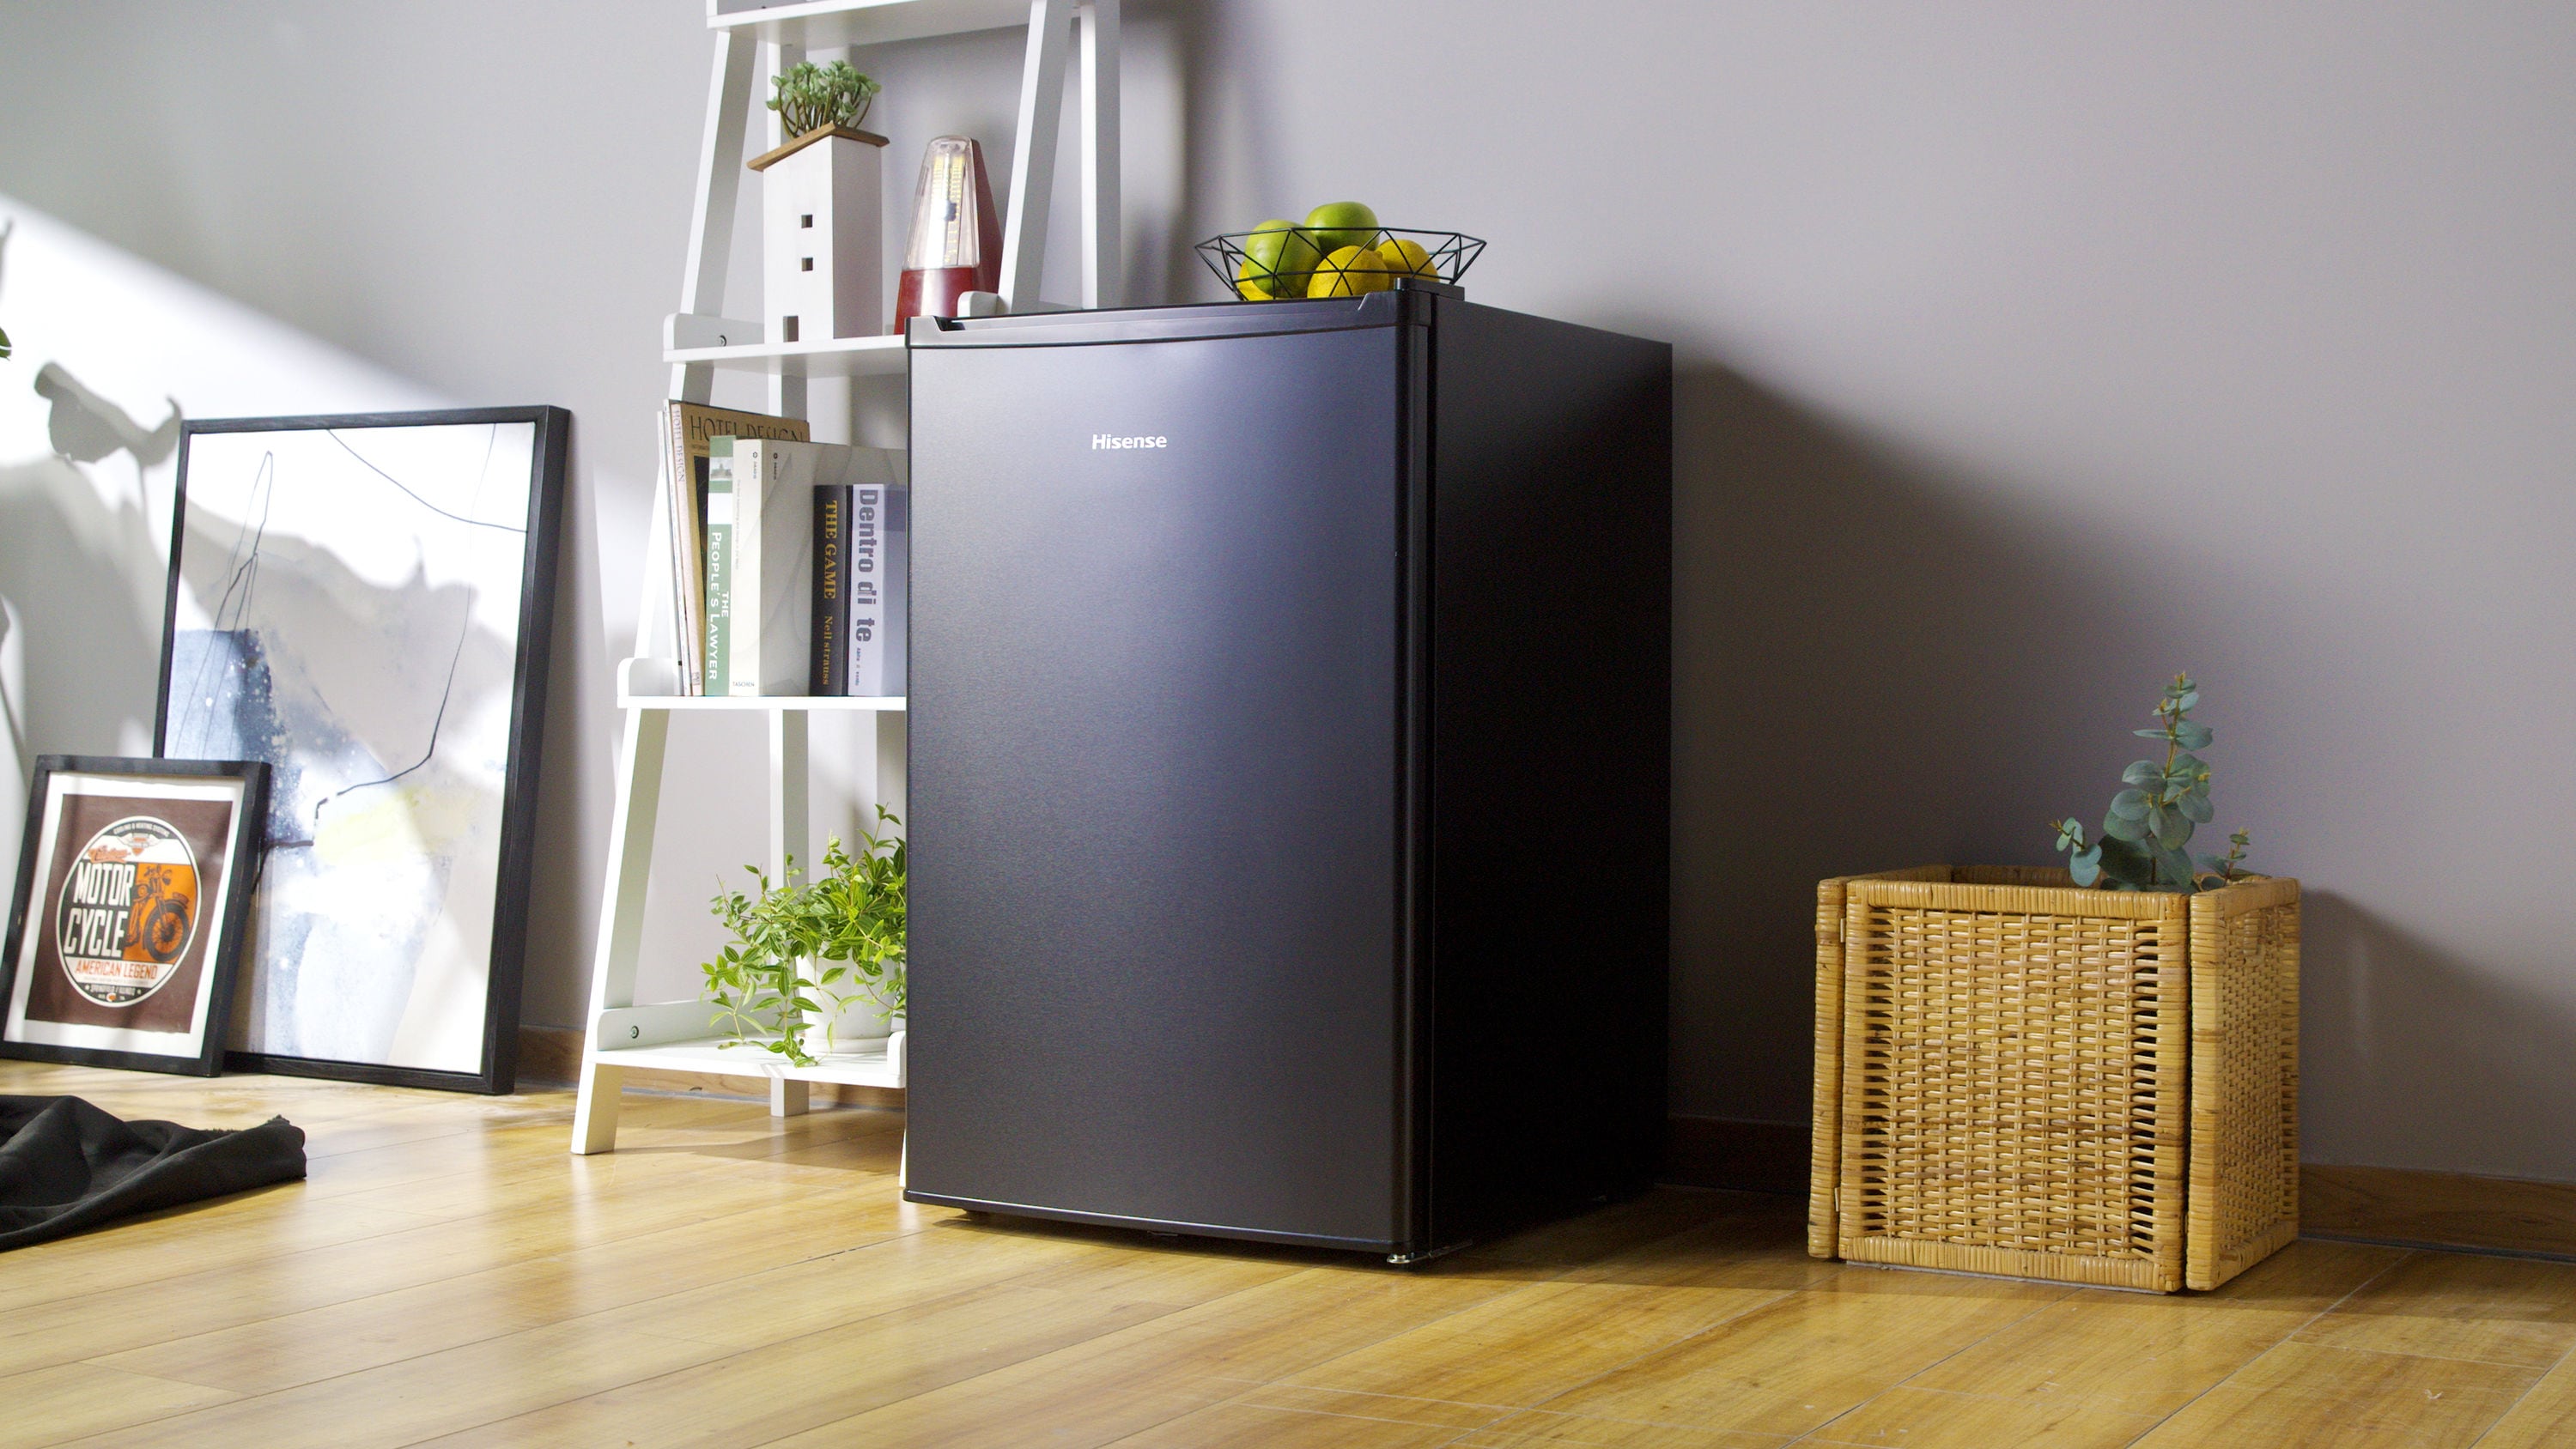 4.4 Cu. Ft. Double Door Apartment Refrigerator (LCT43D6ASE) - Hisense USA